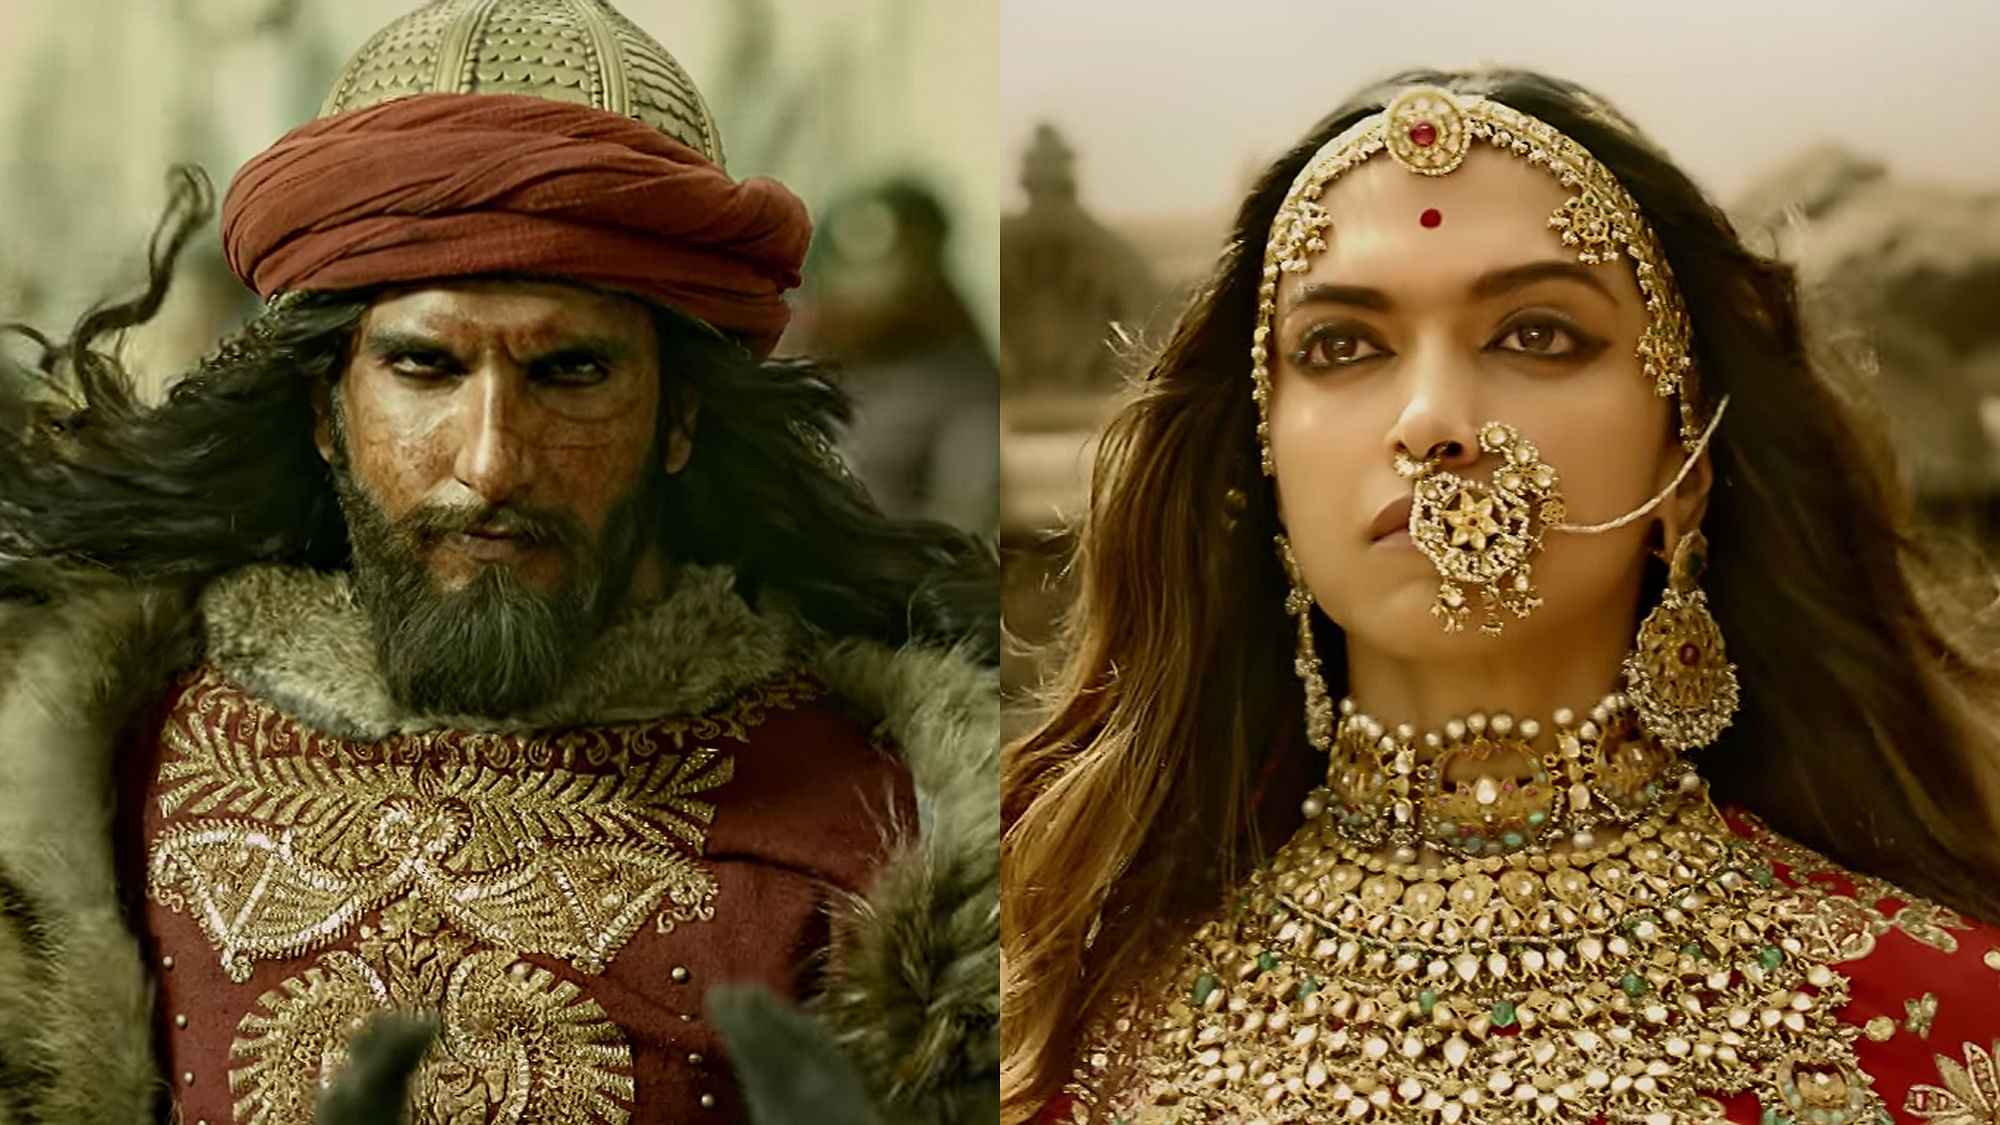 Ranveer Singh as Alauddin Khilji and Deepika Padukone as Padmavati in the movie ‘Padmavati’.